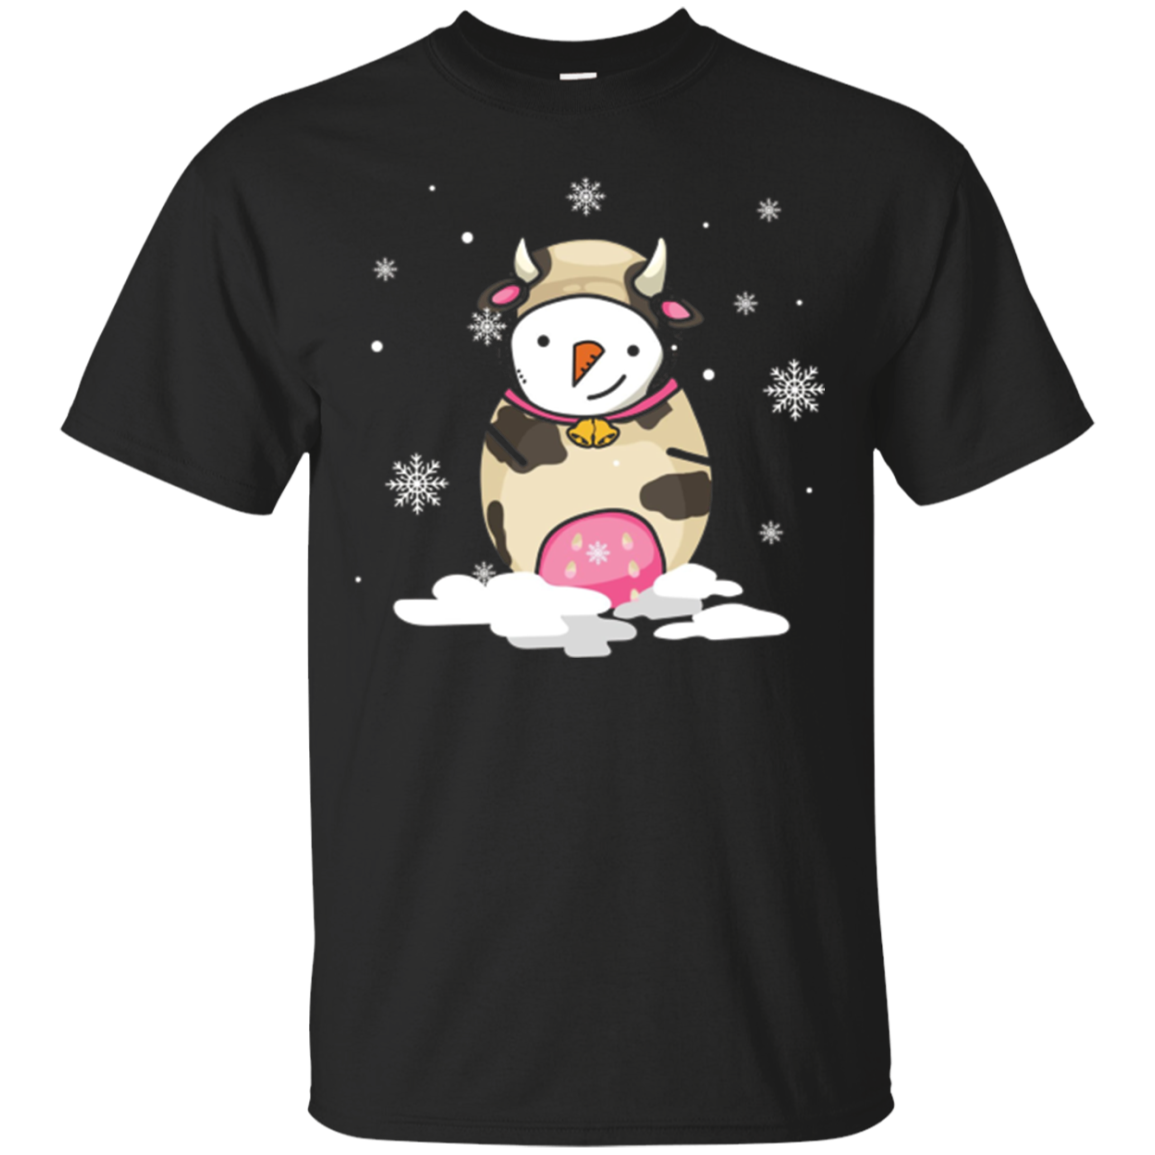 Order Funny Cow Costume Snowman Cute Farmer Christmas Shirt